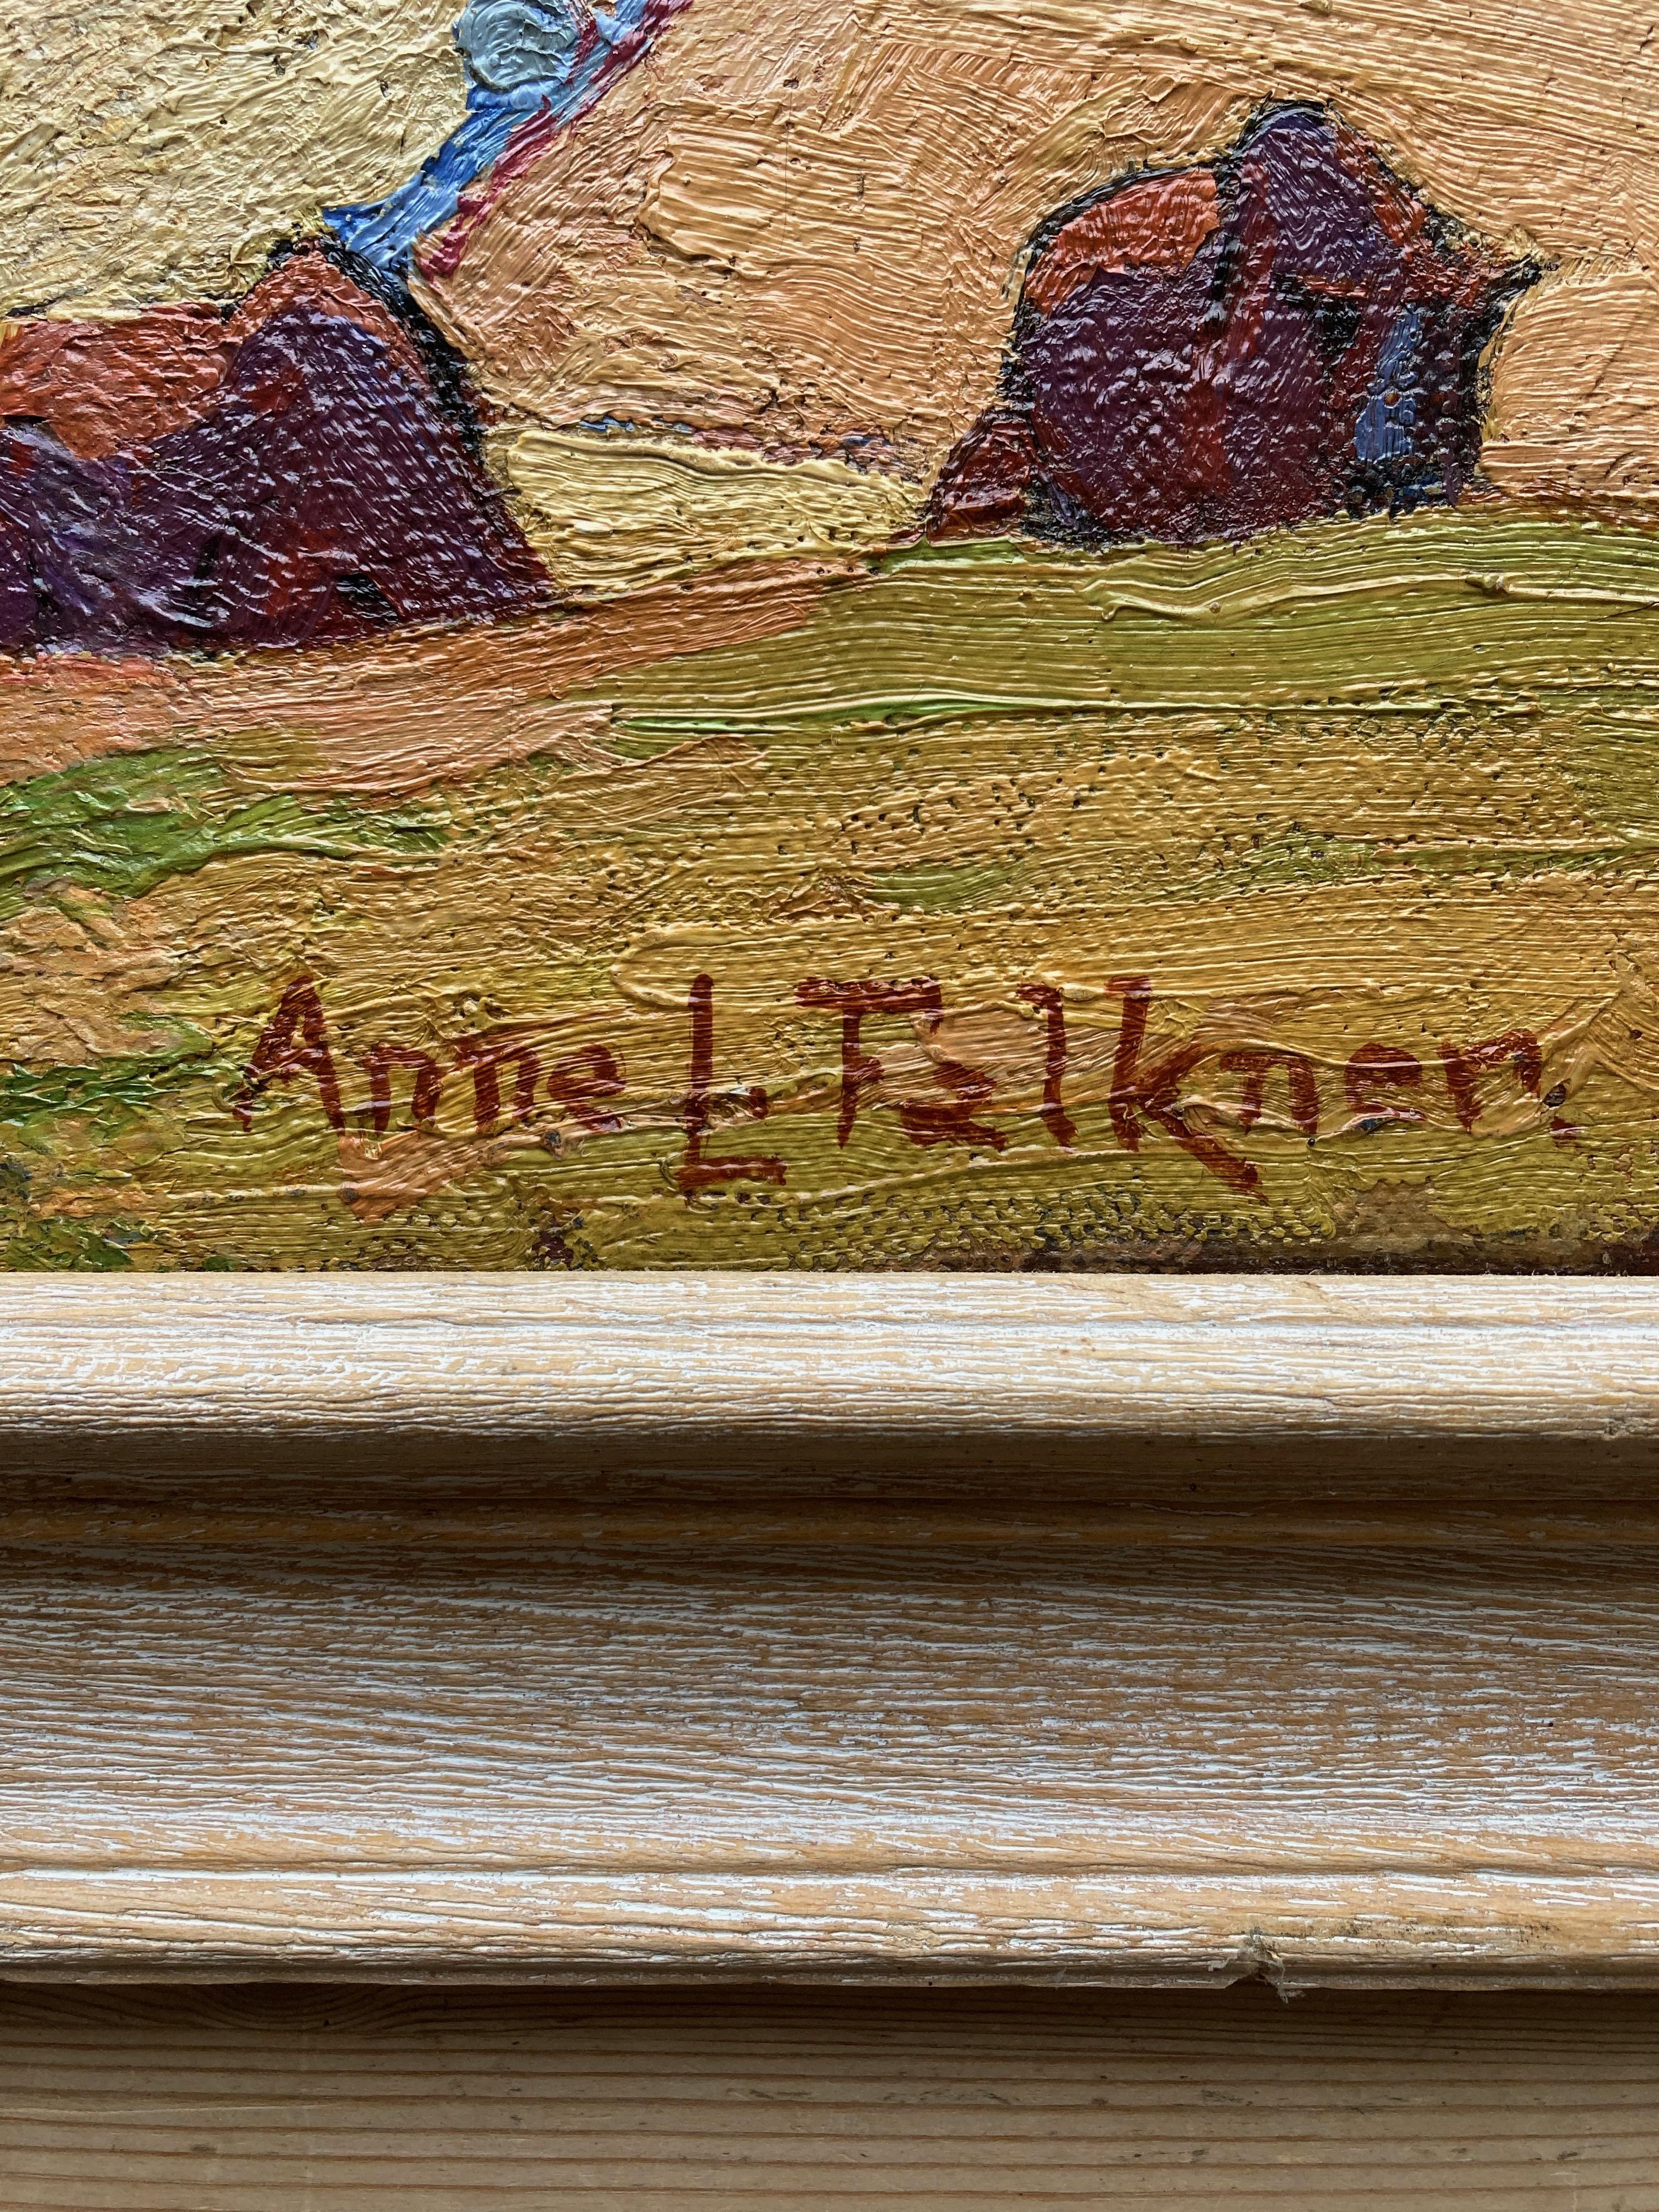 Anne Louise Falkner, British Impressionist, Female artist, horses on a hillside 9